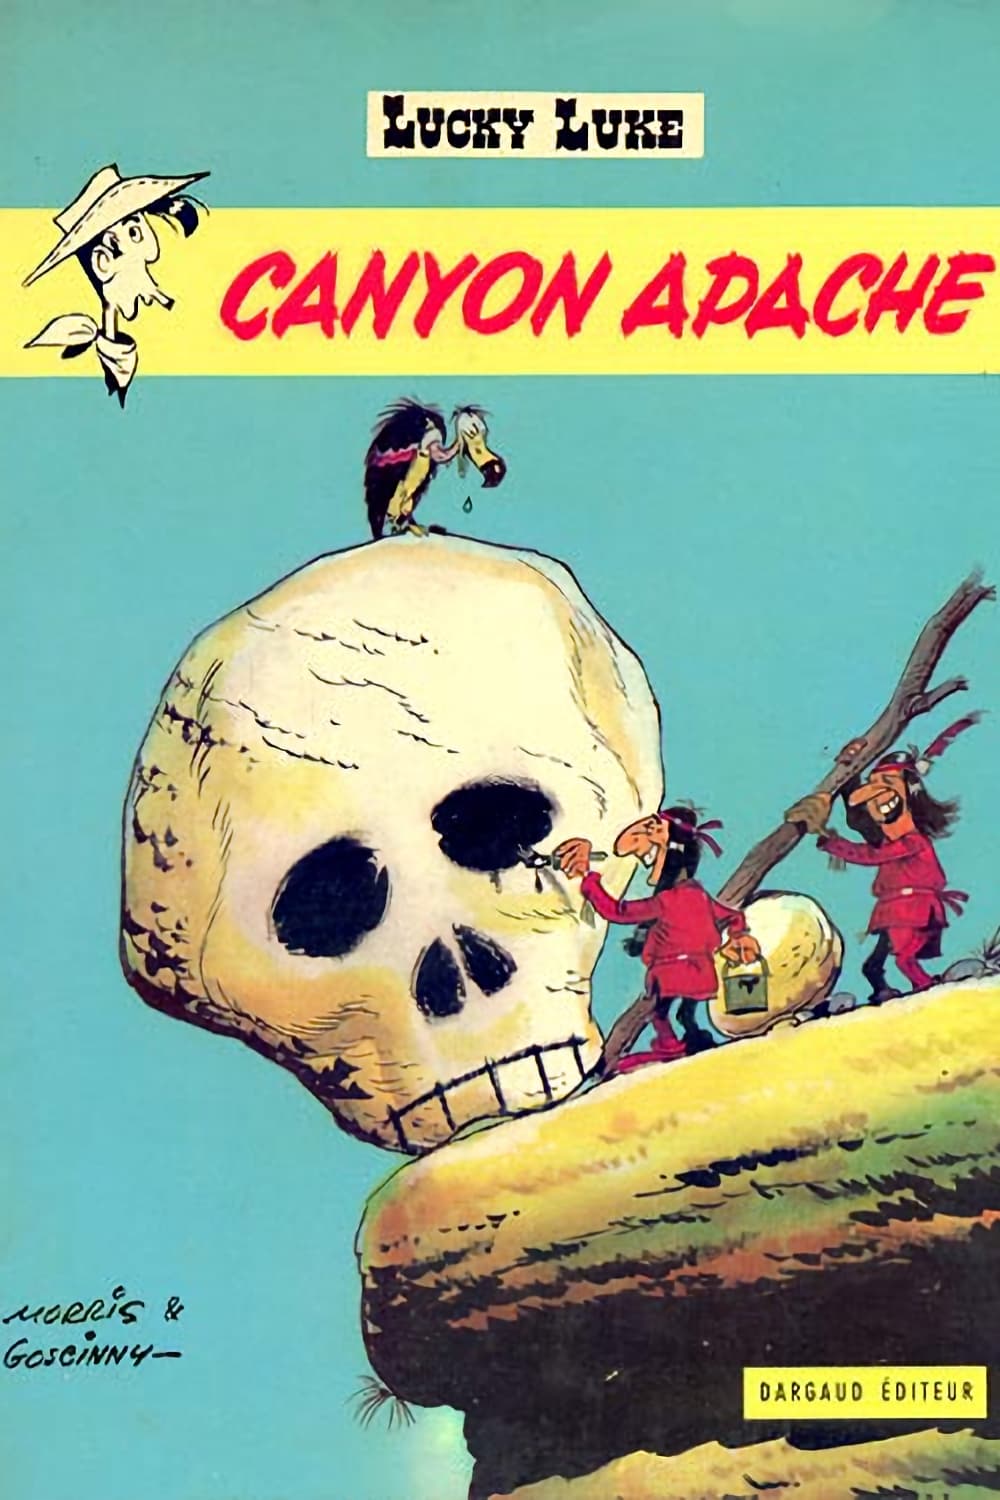 Canyon Apache